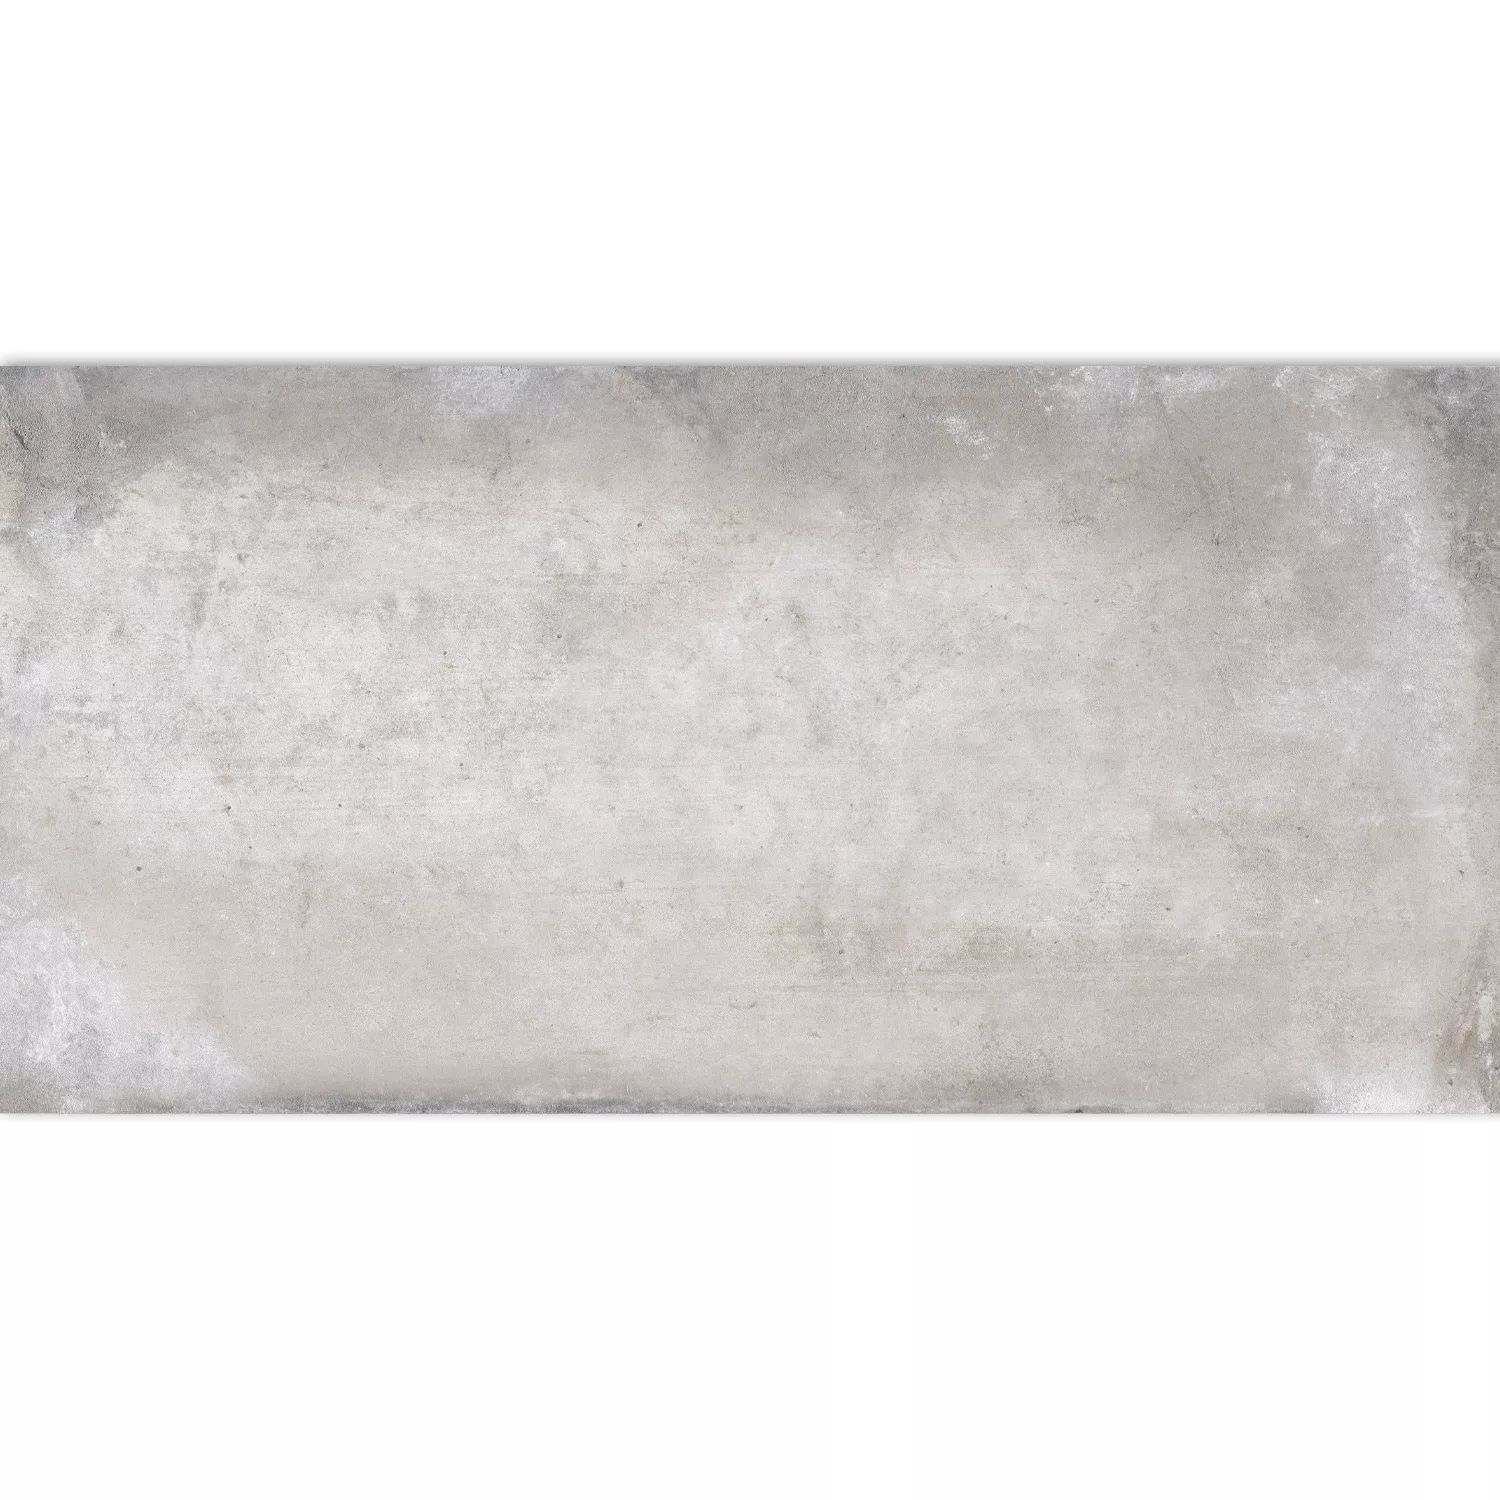 Vzorek Podlahová Dlaždice Cementový Vzhled Maryland Šedá 30x60cm